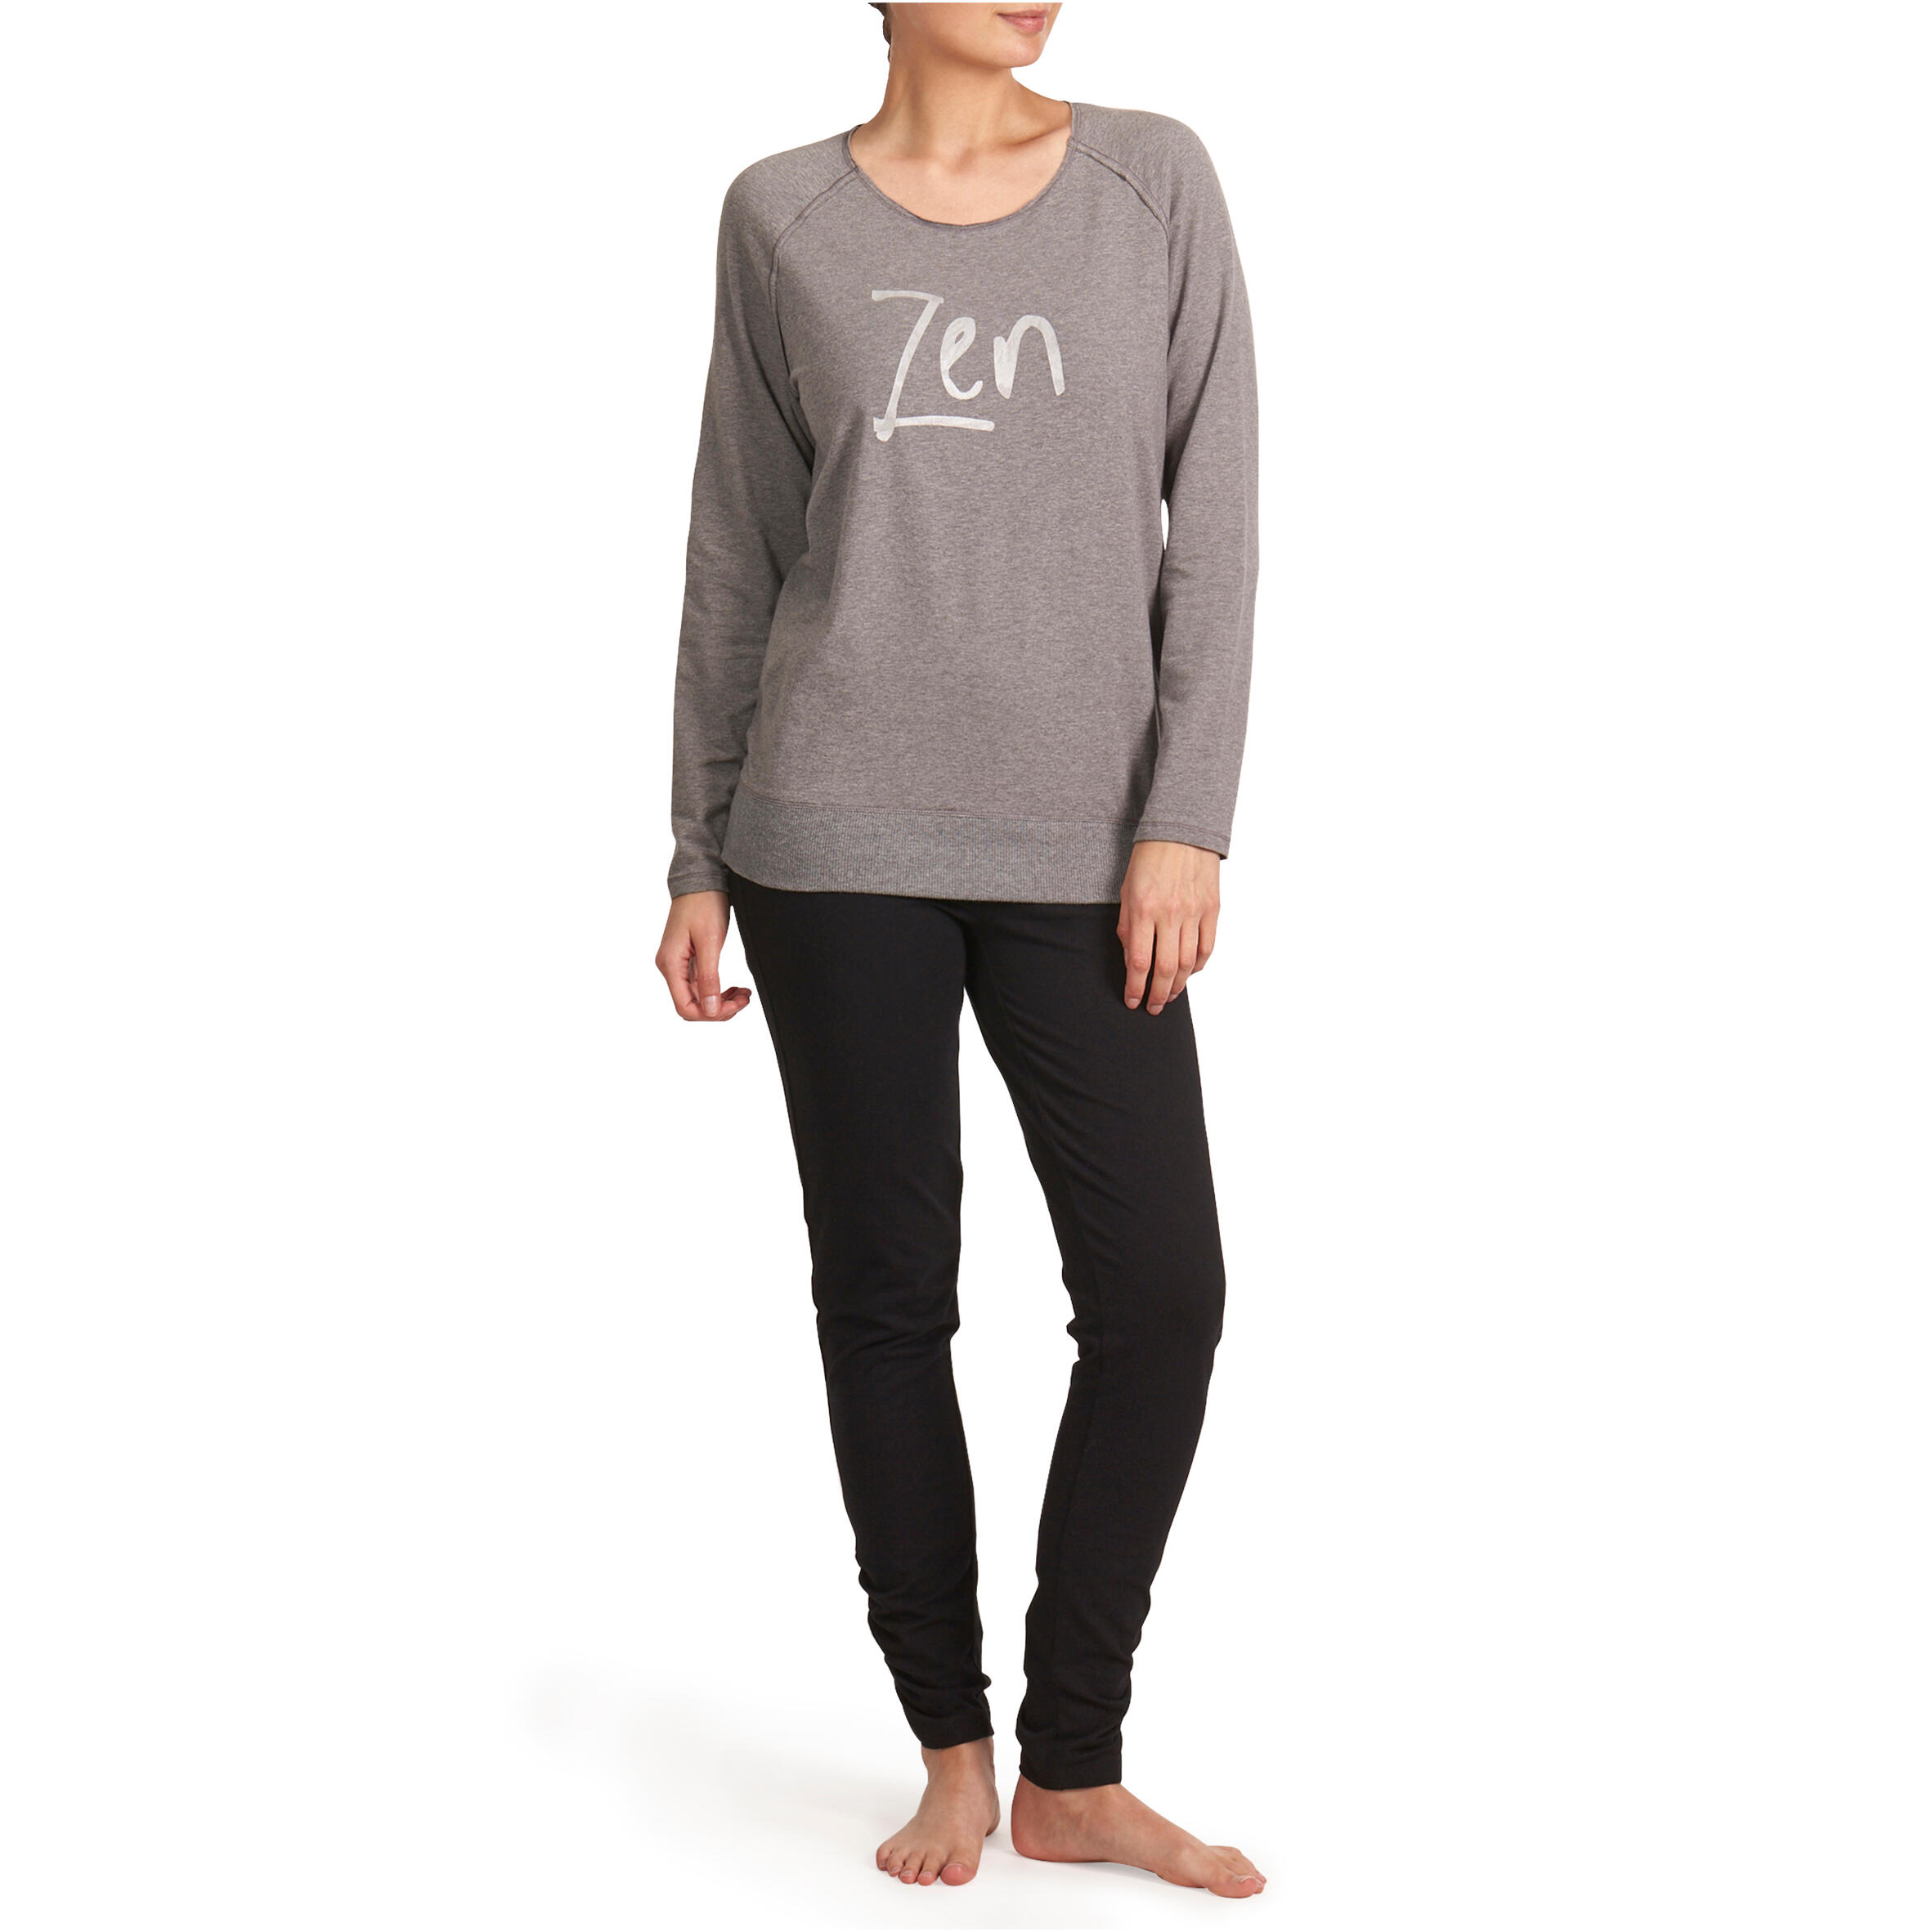 Women's Organic Cotton Long-Sleeved Yoga T-Shirt - Mottled Grey 12/12